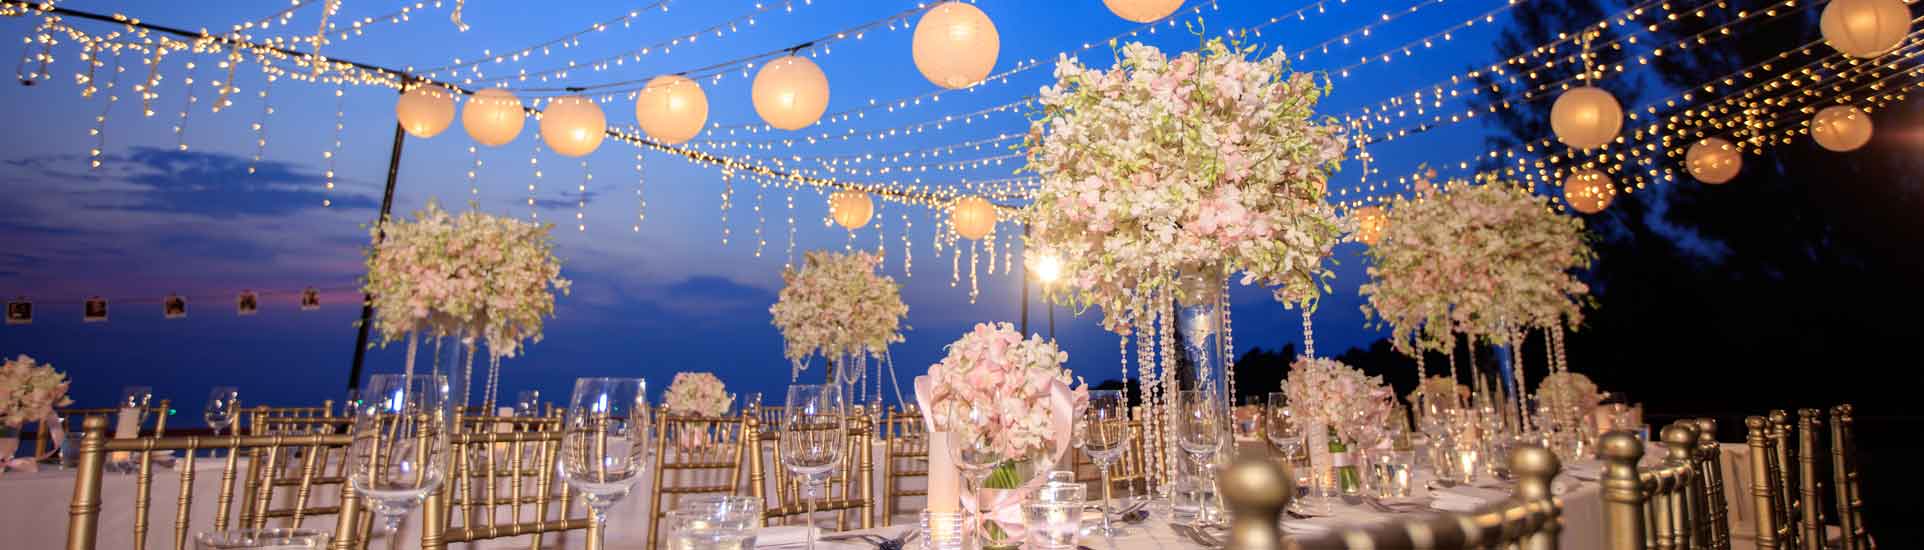 rhodes-wedding-services-fairy-lights-decorative-lighting-header